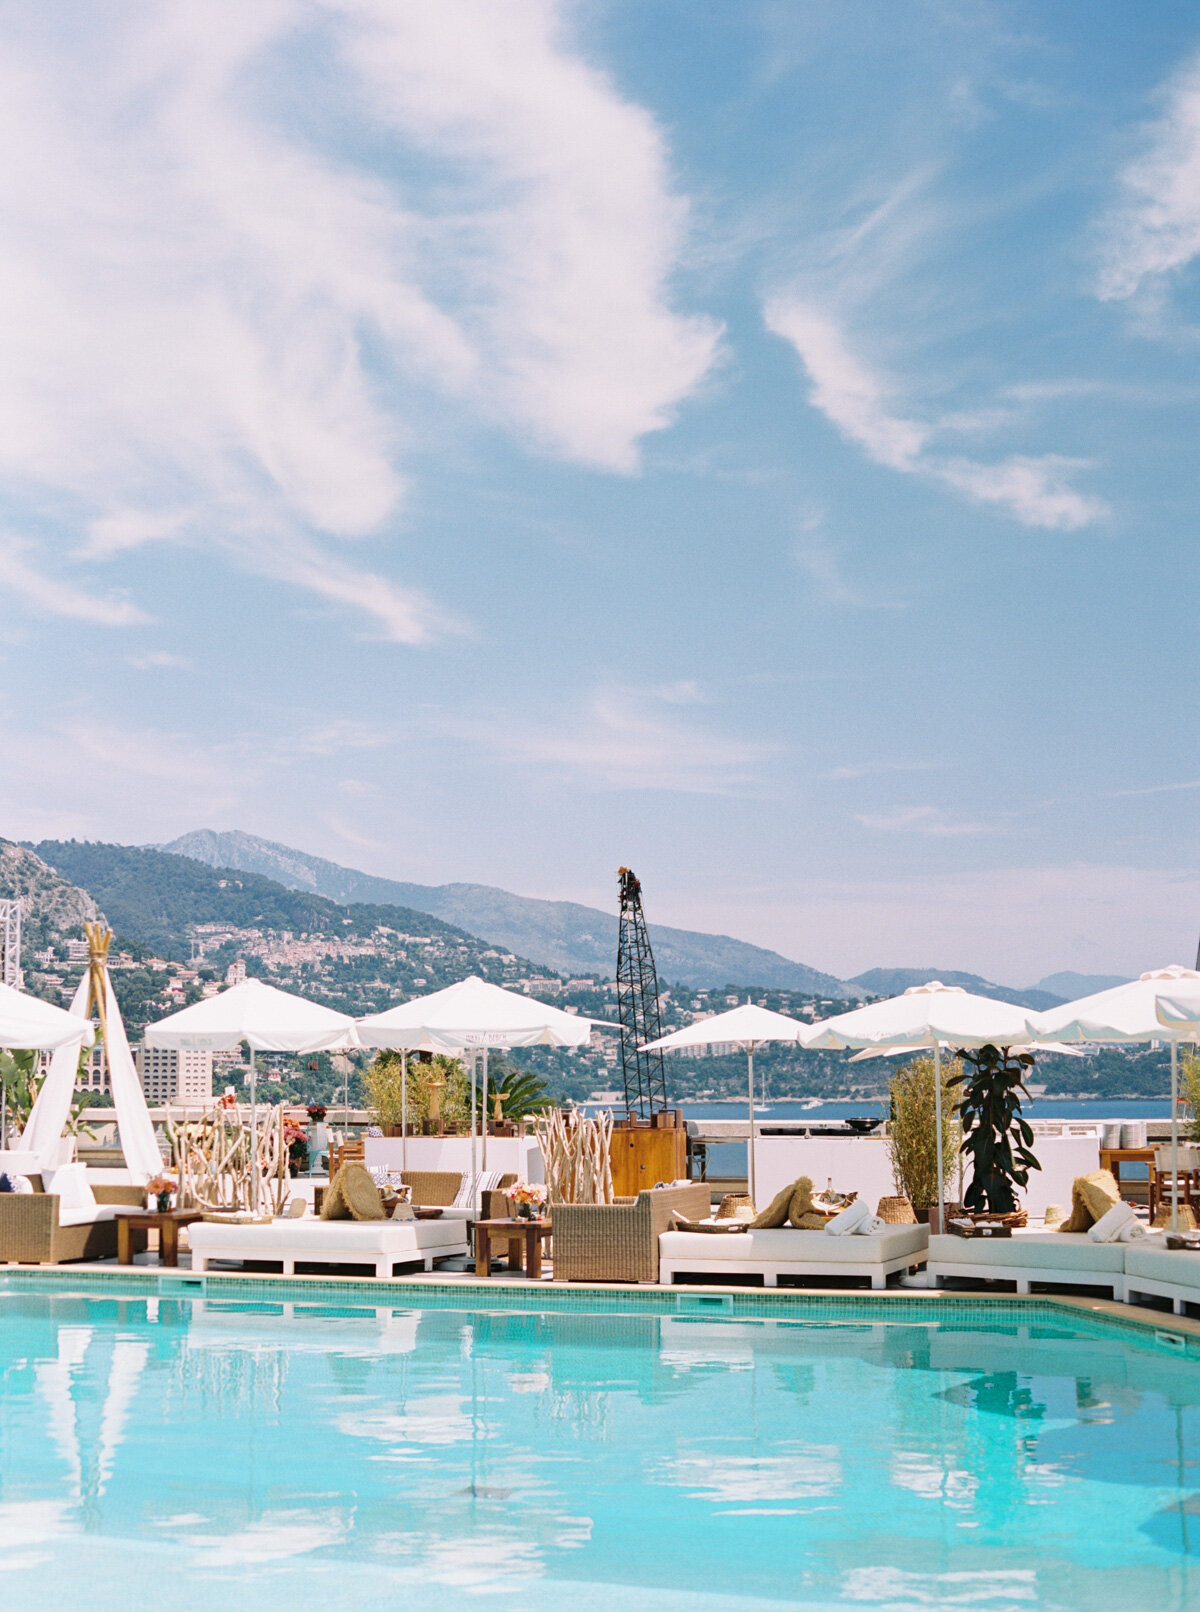 Nikki-Beach-Club-Pool-Monaco-Nice-Saint Tropez-Welcome-Dinner-Katie-Grant-destination-wedding (6 of 22).jpg